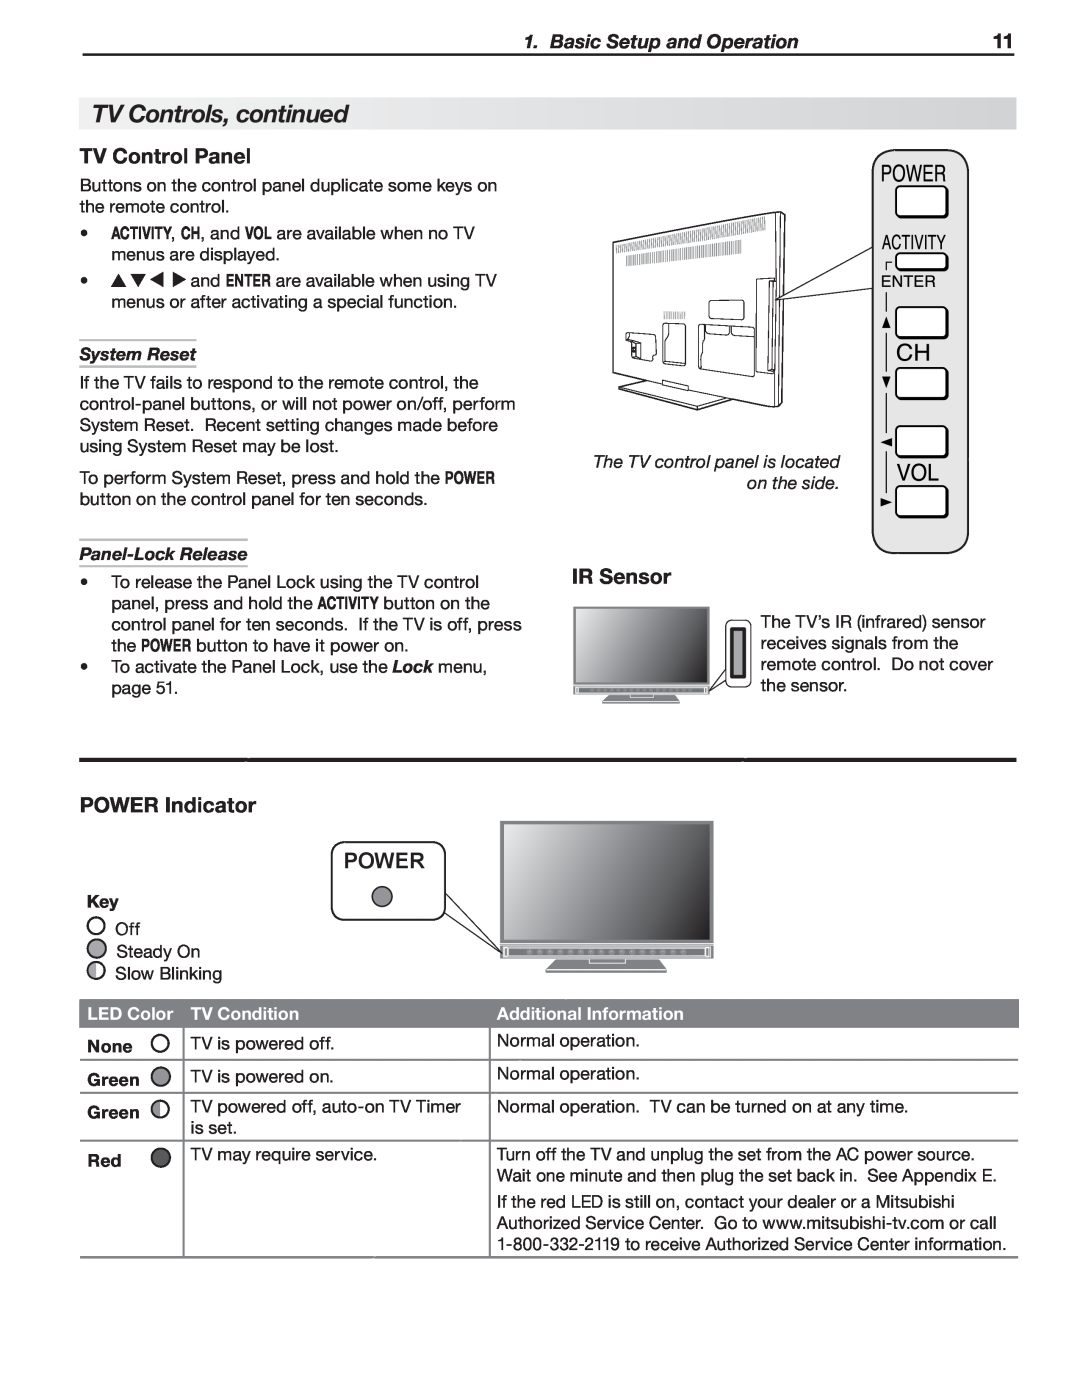 Mitsubishi Electronics LT-52151 TV Controls, continued, TV Control Panel, IR Sensor, POWER Indicator POWER, System Reset 